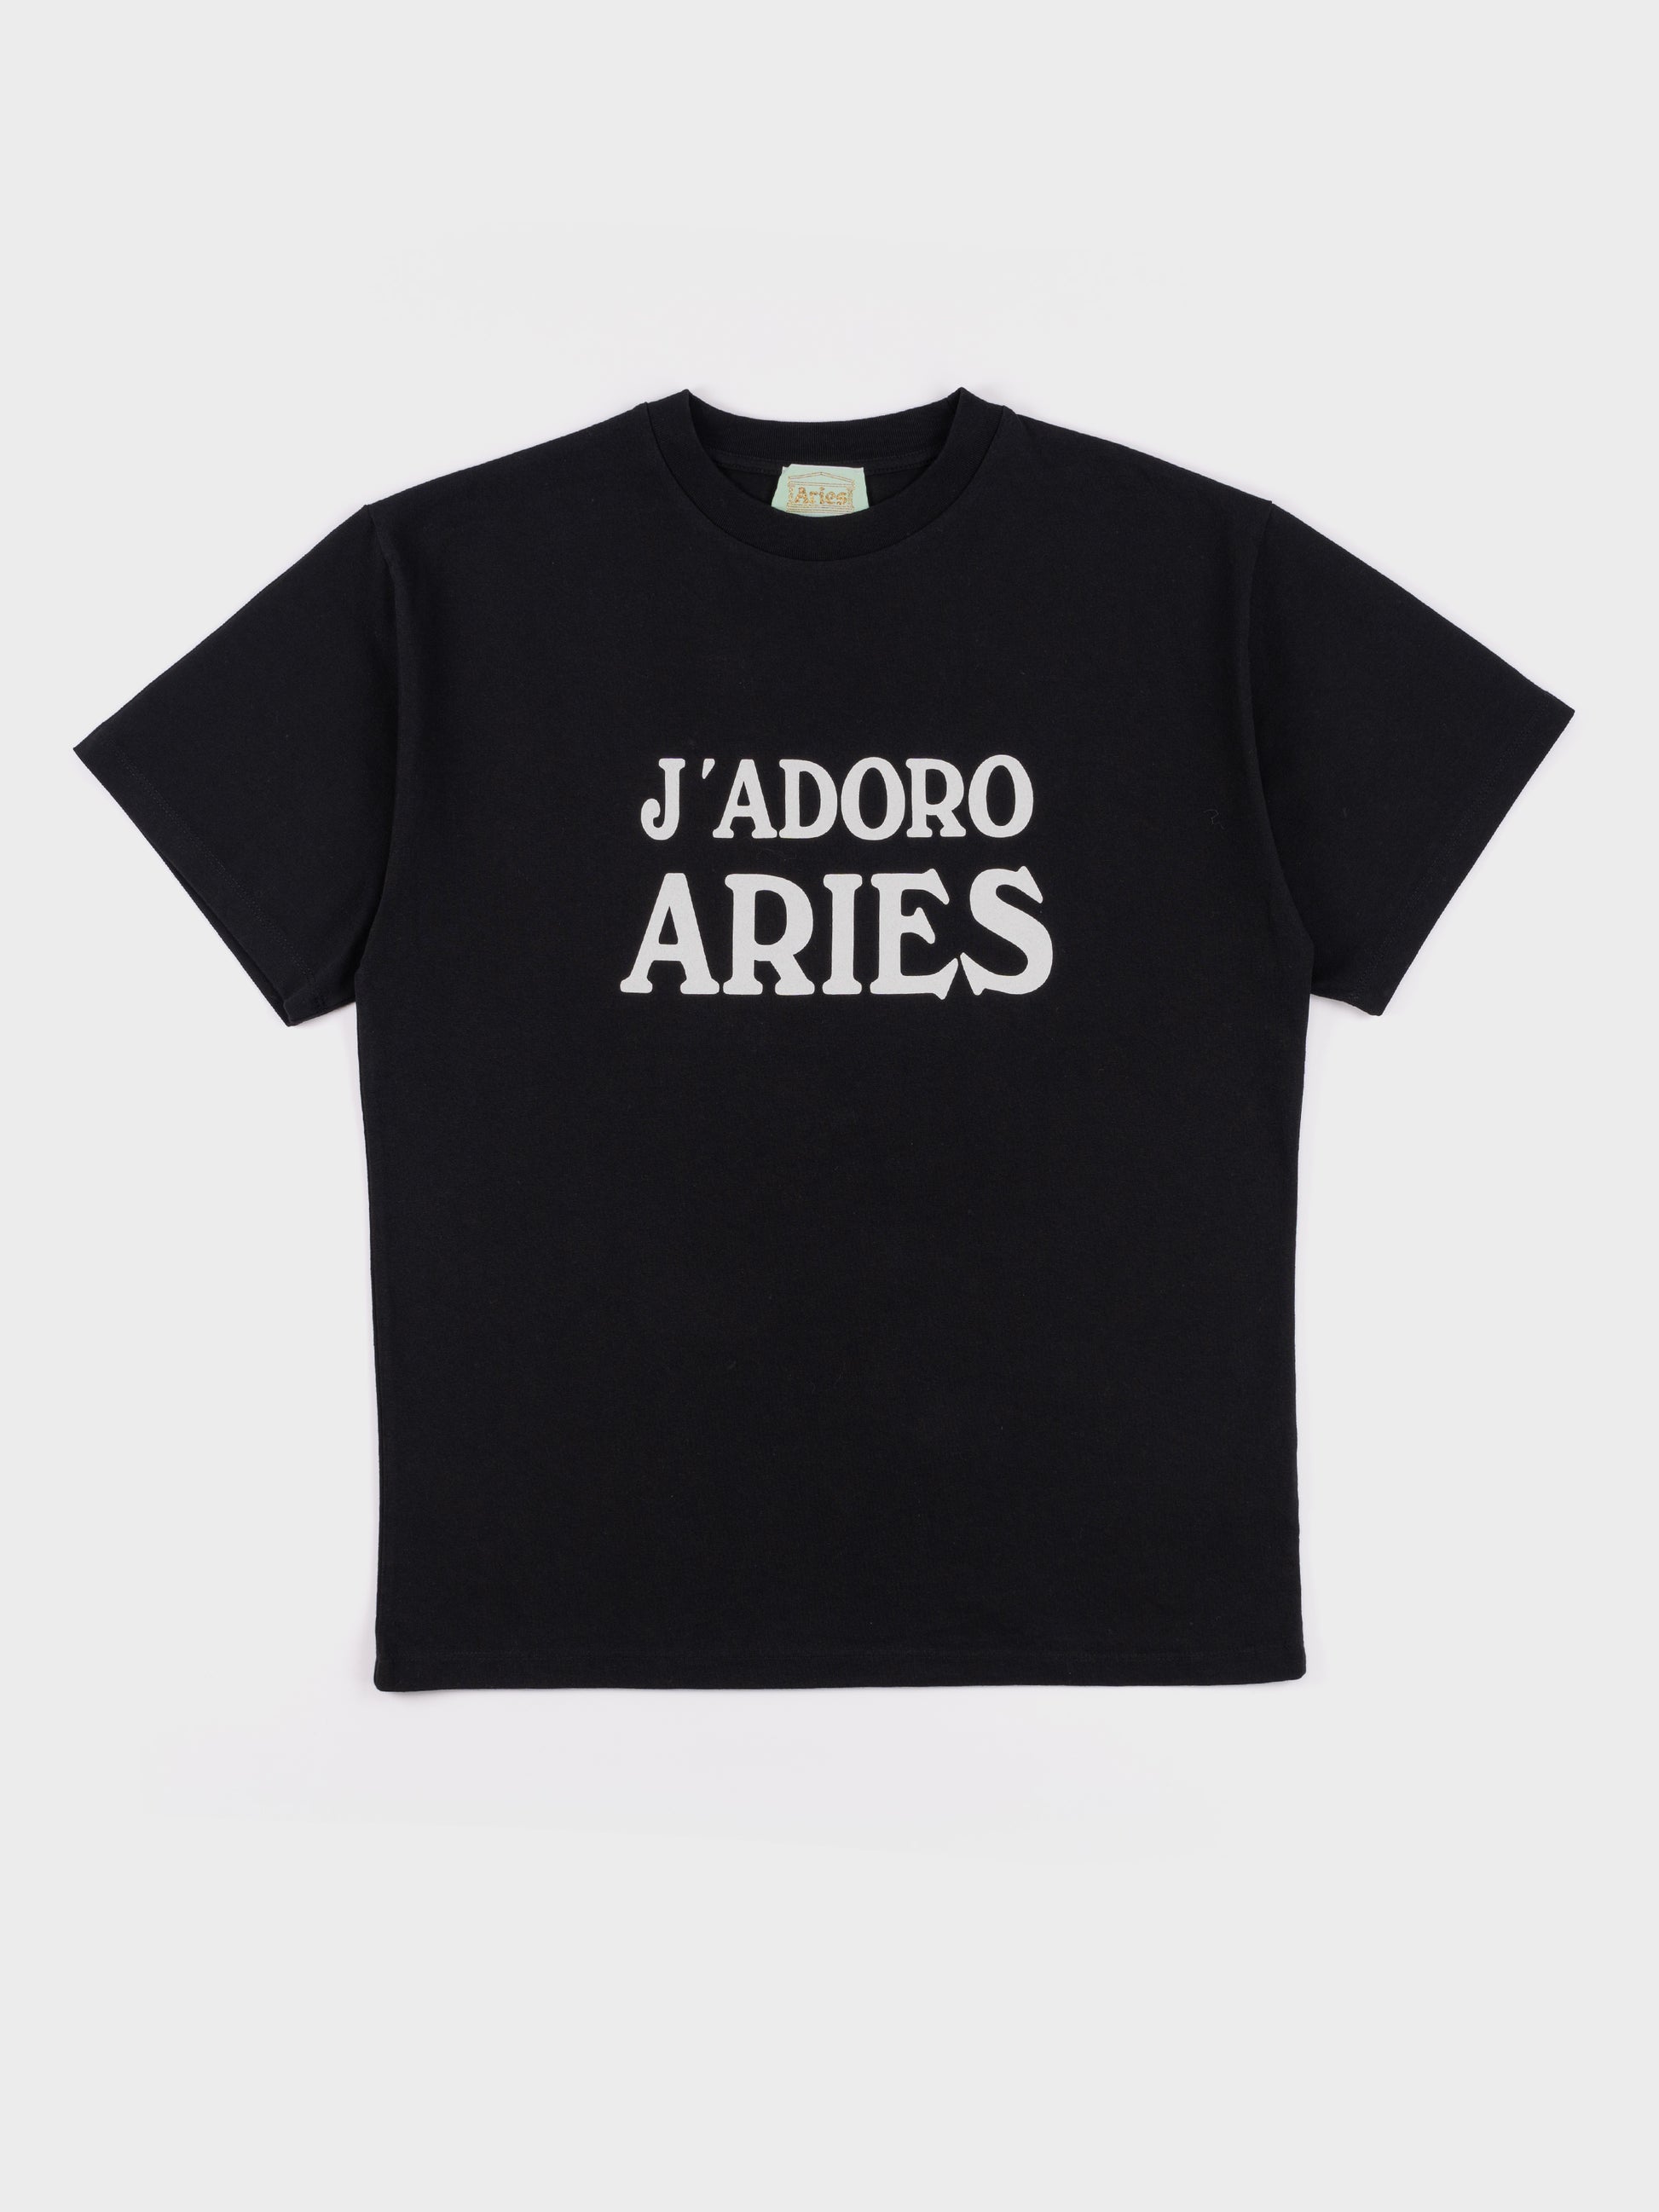 Aries J'adoro Aries SS T-Shirt - Black